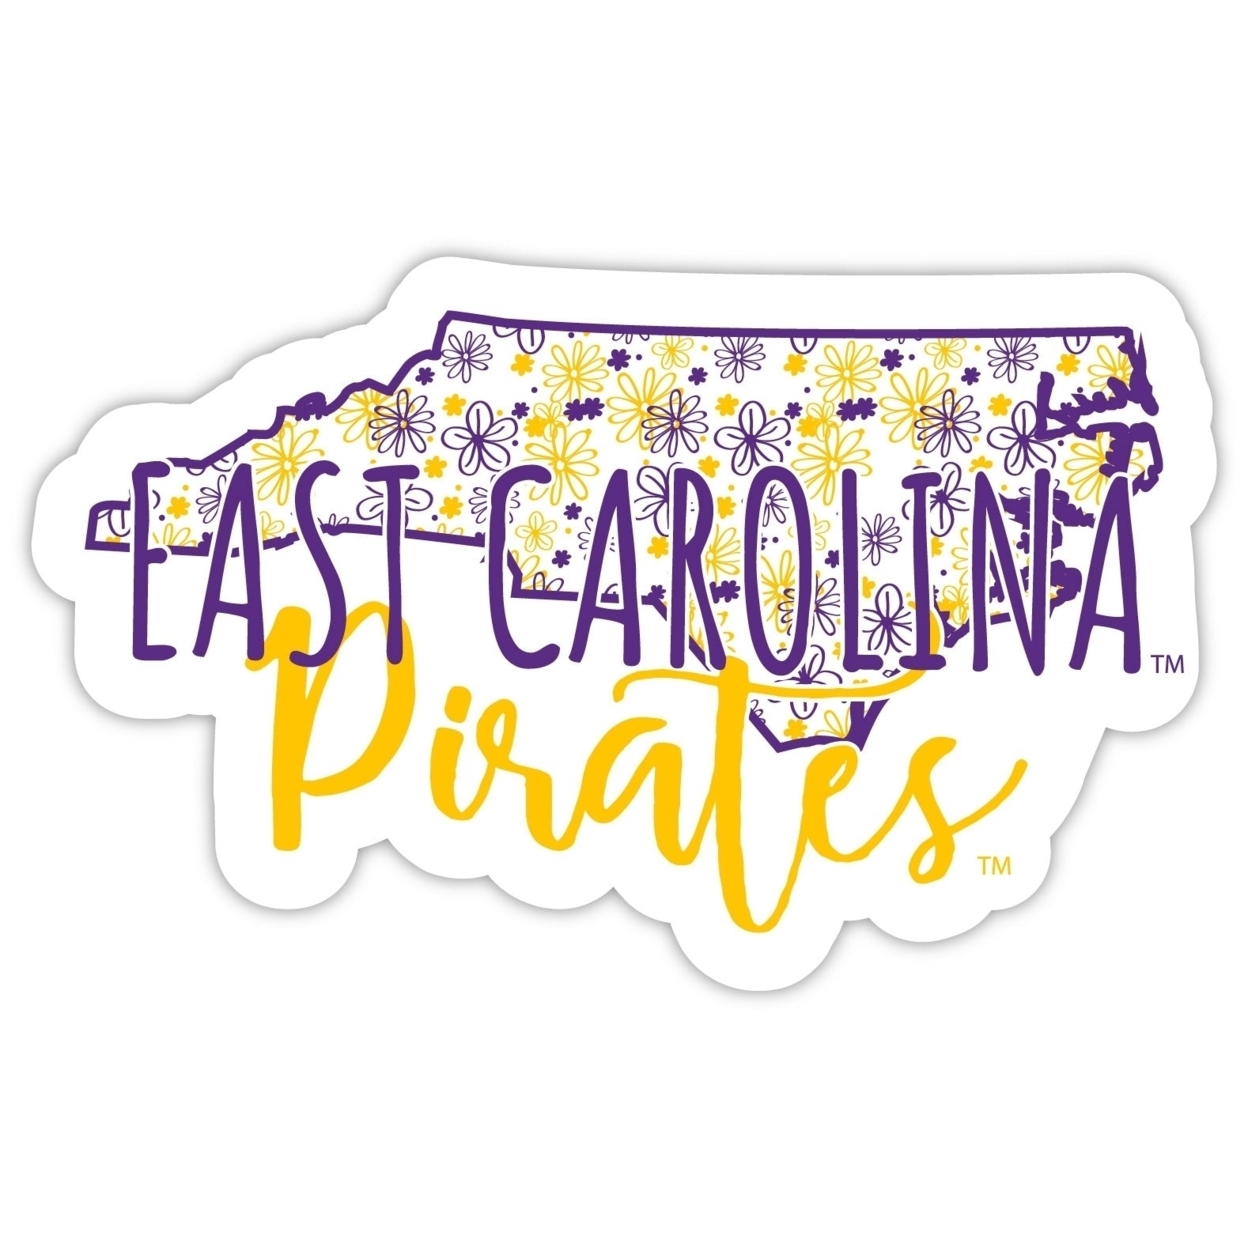 East Carolina Pirates Floral State Die Cut Decal 4-Inch